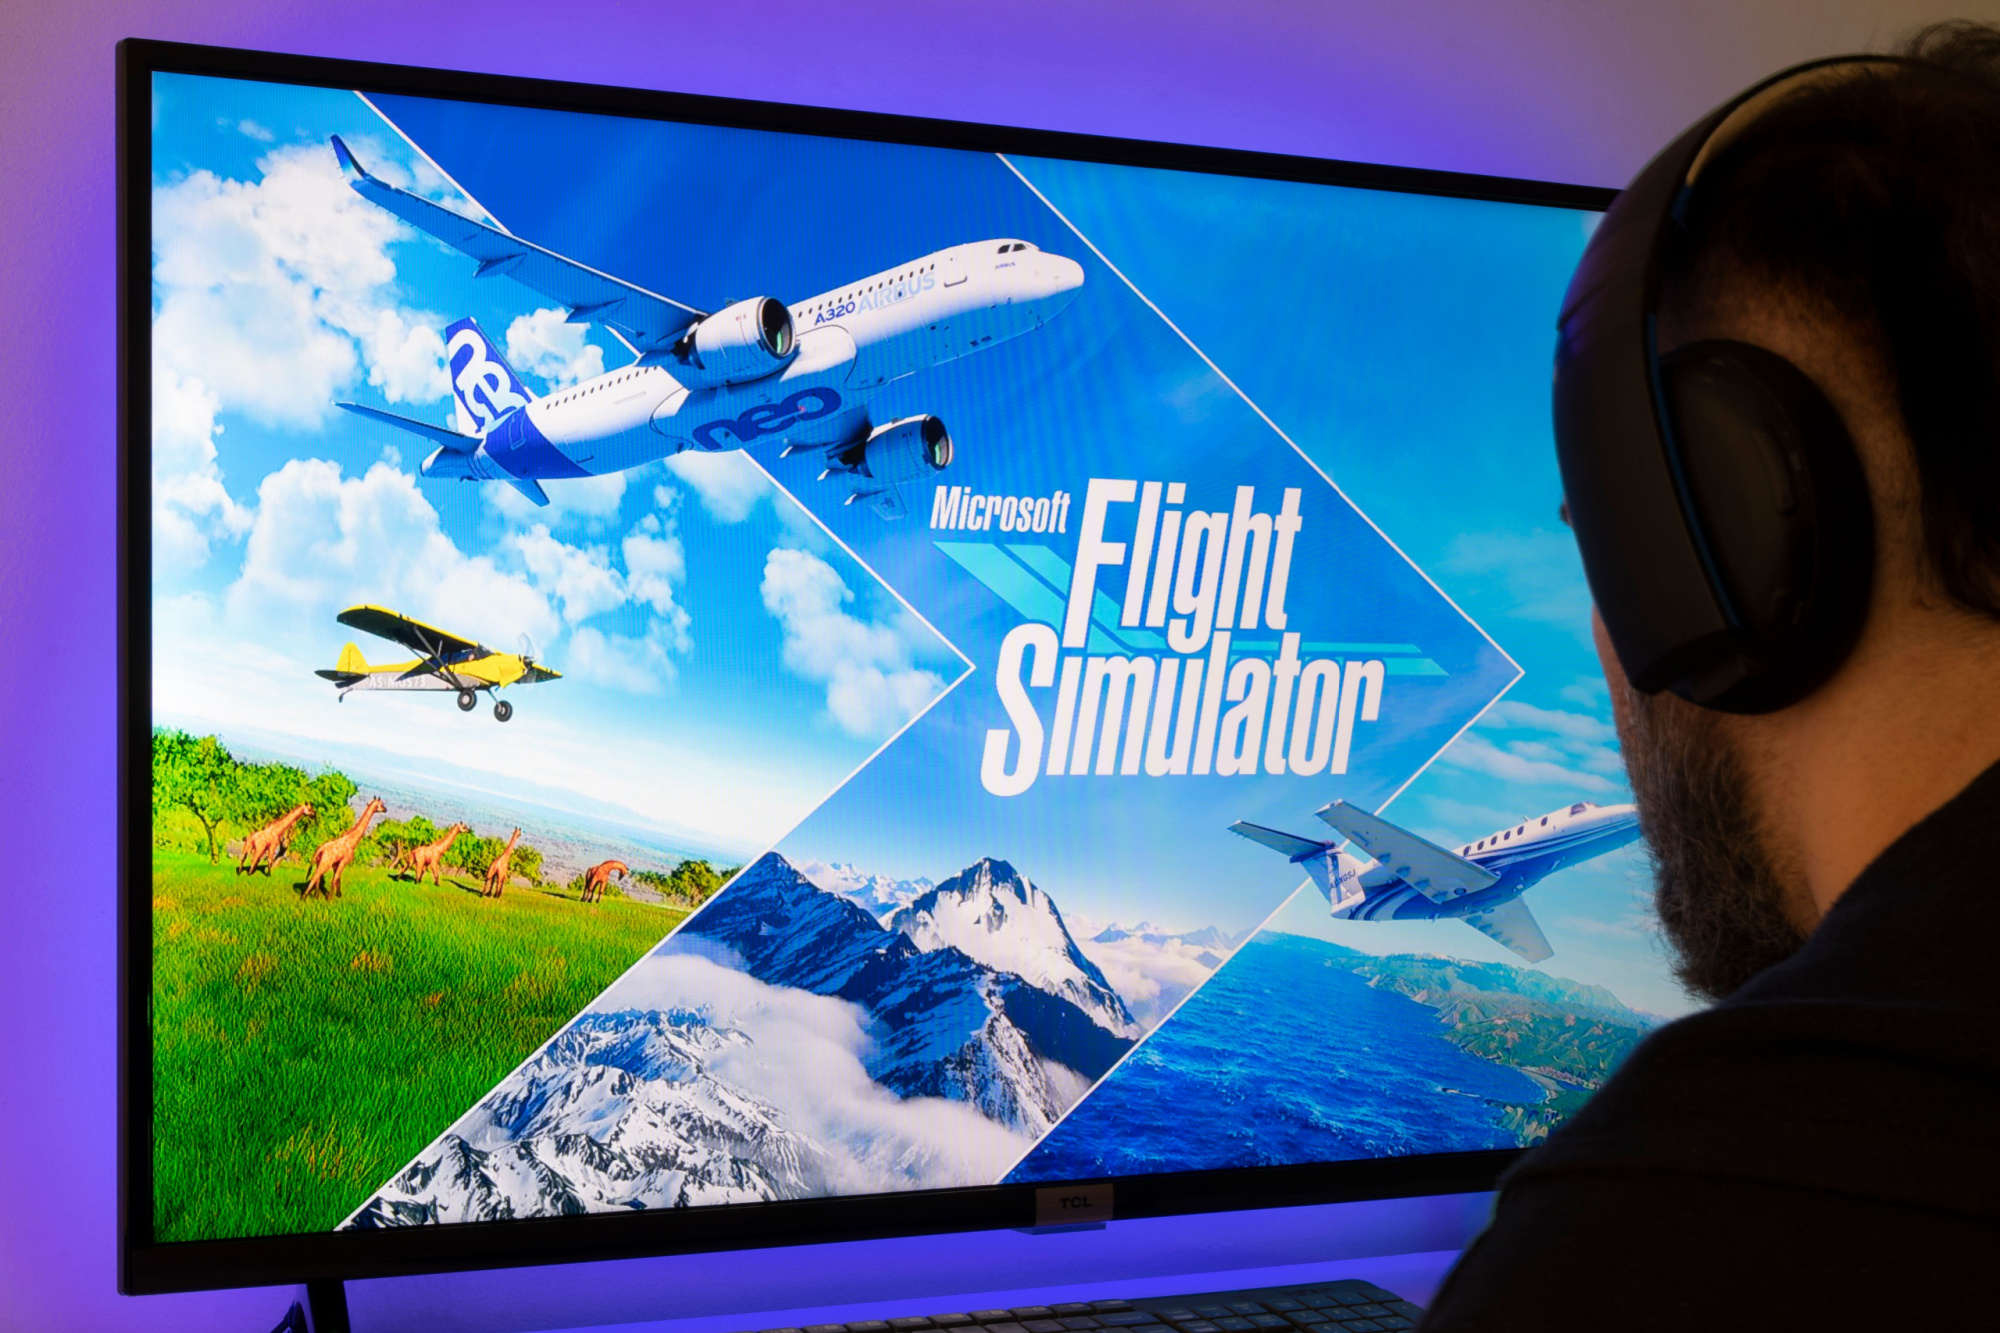 Microsoft Flight Simulator is good, but how realistic is it?